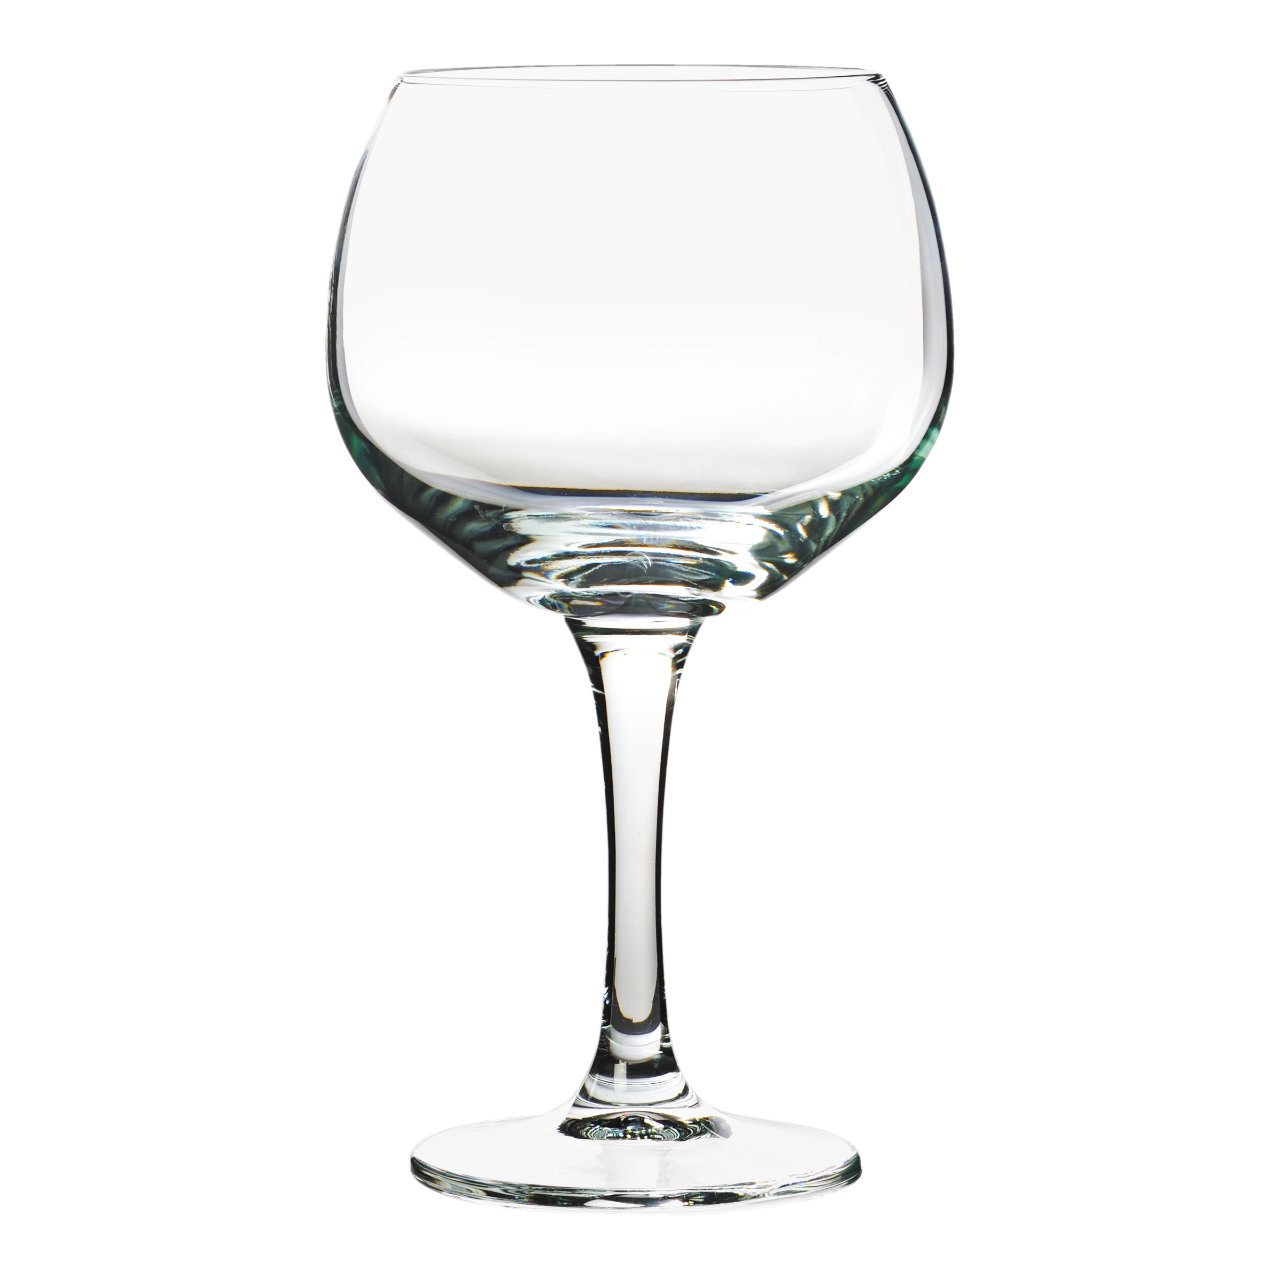 blootstelling Dubbelzinnigheid Beeldhouwwerk Royal Leerdam Specials Glas gin tonic 60 cl Doos 6 stuks | Sligro.nl